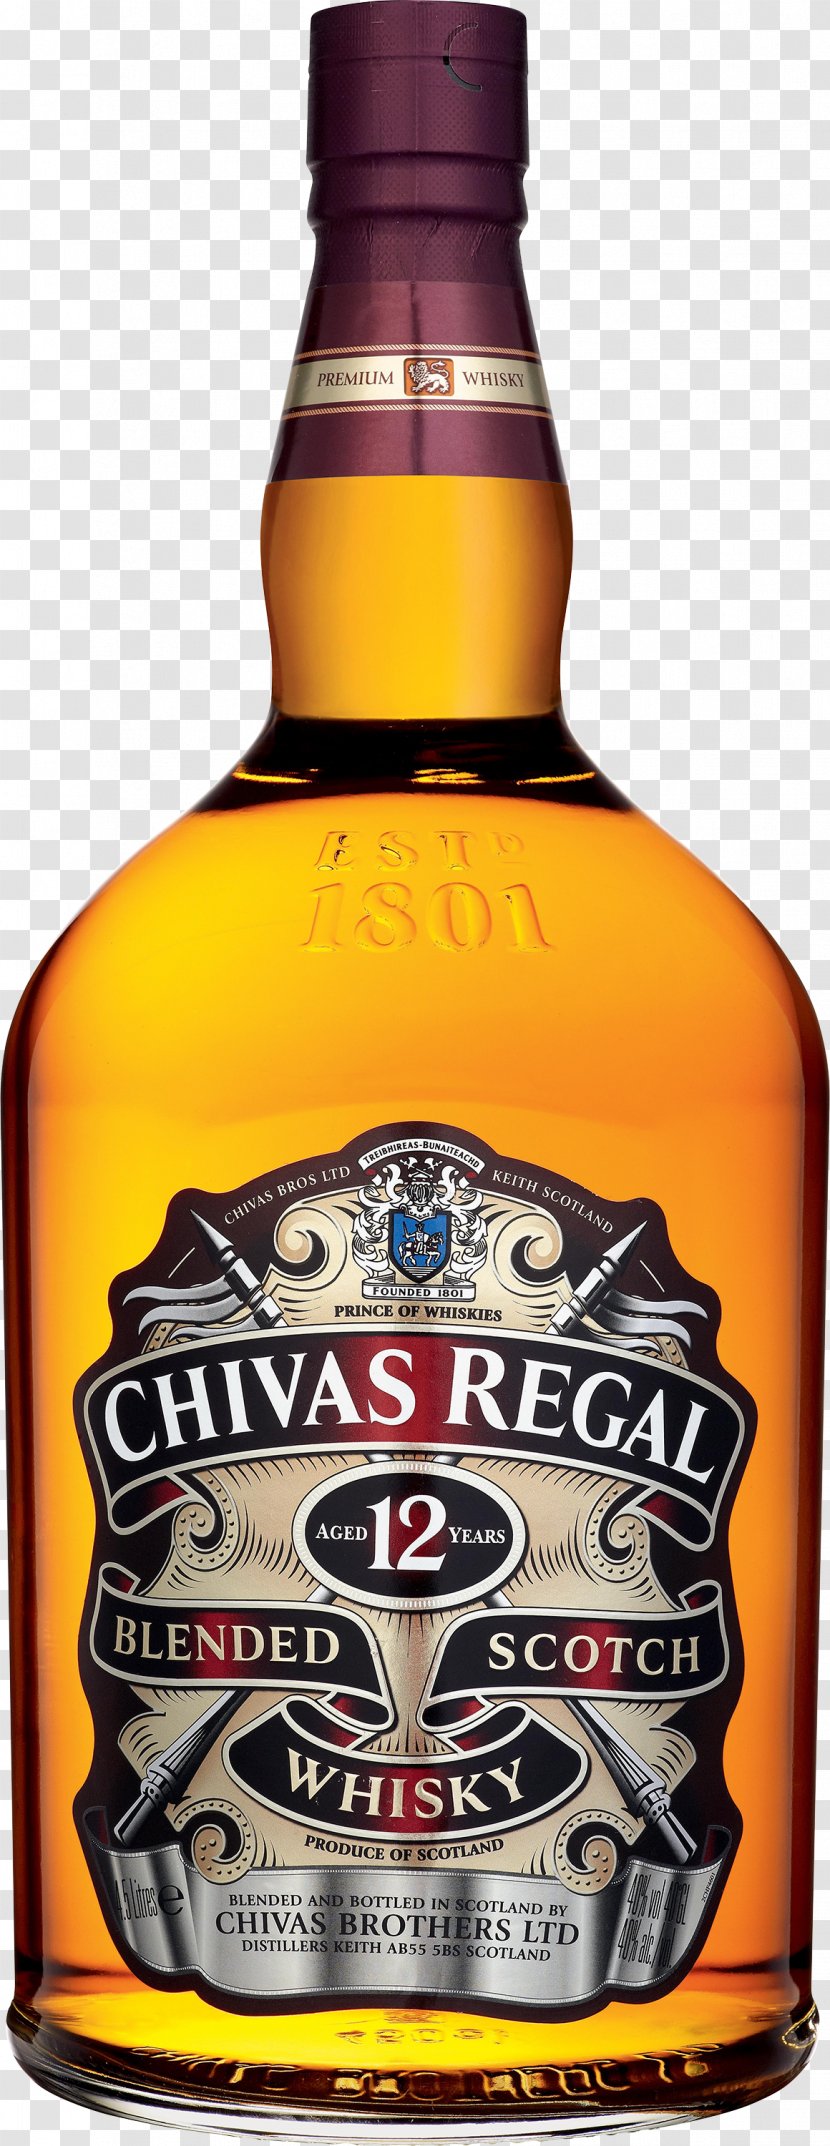 Chivas Regal Scotch Whisky Blended Whiskey Distilled Beverage - Alcoholic Drink - Whisky. Transparent PNG